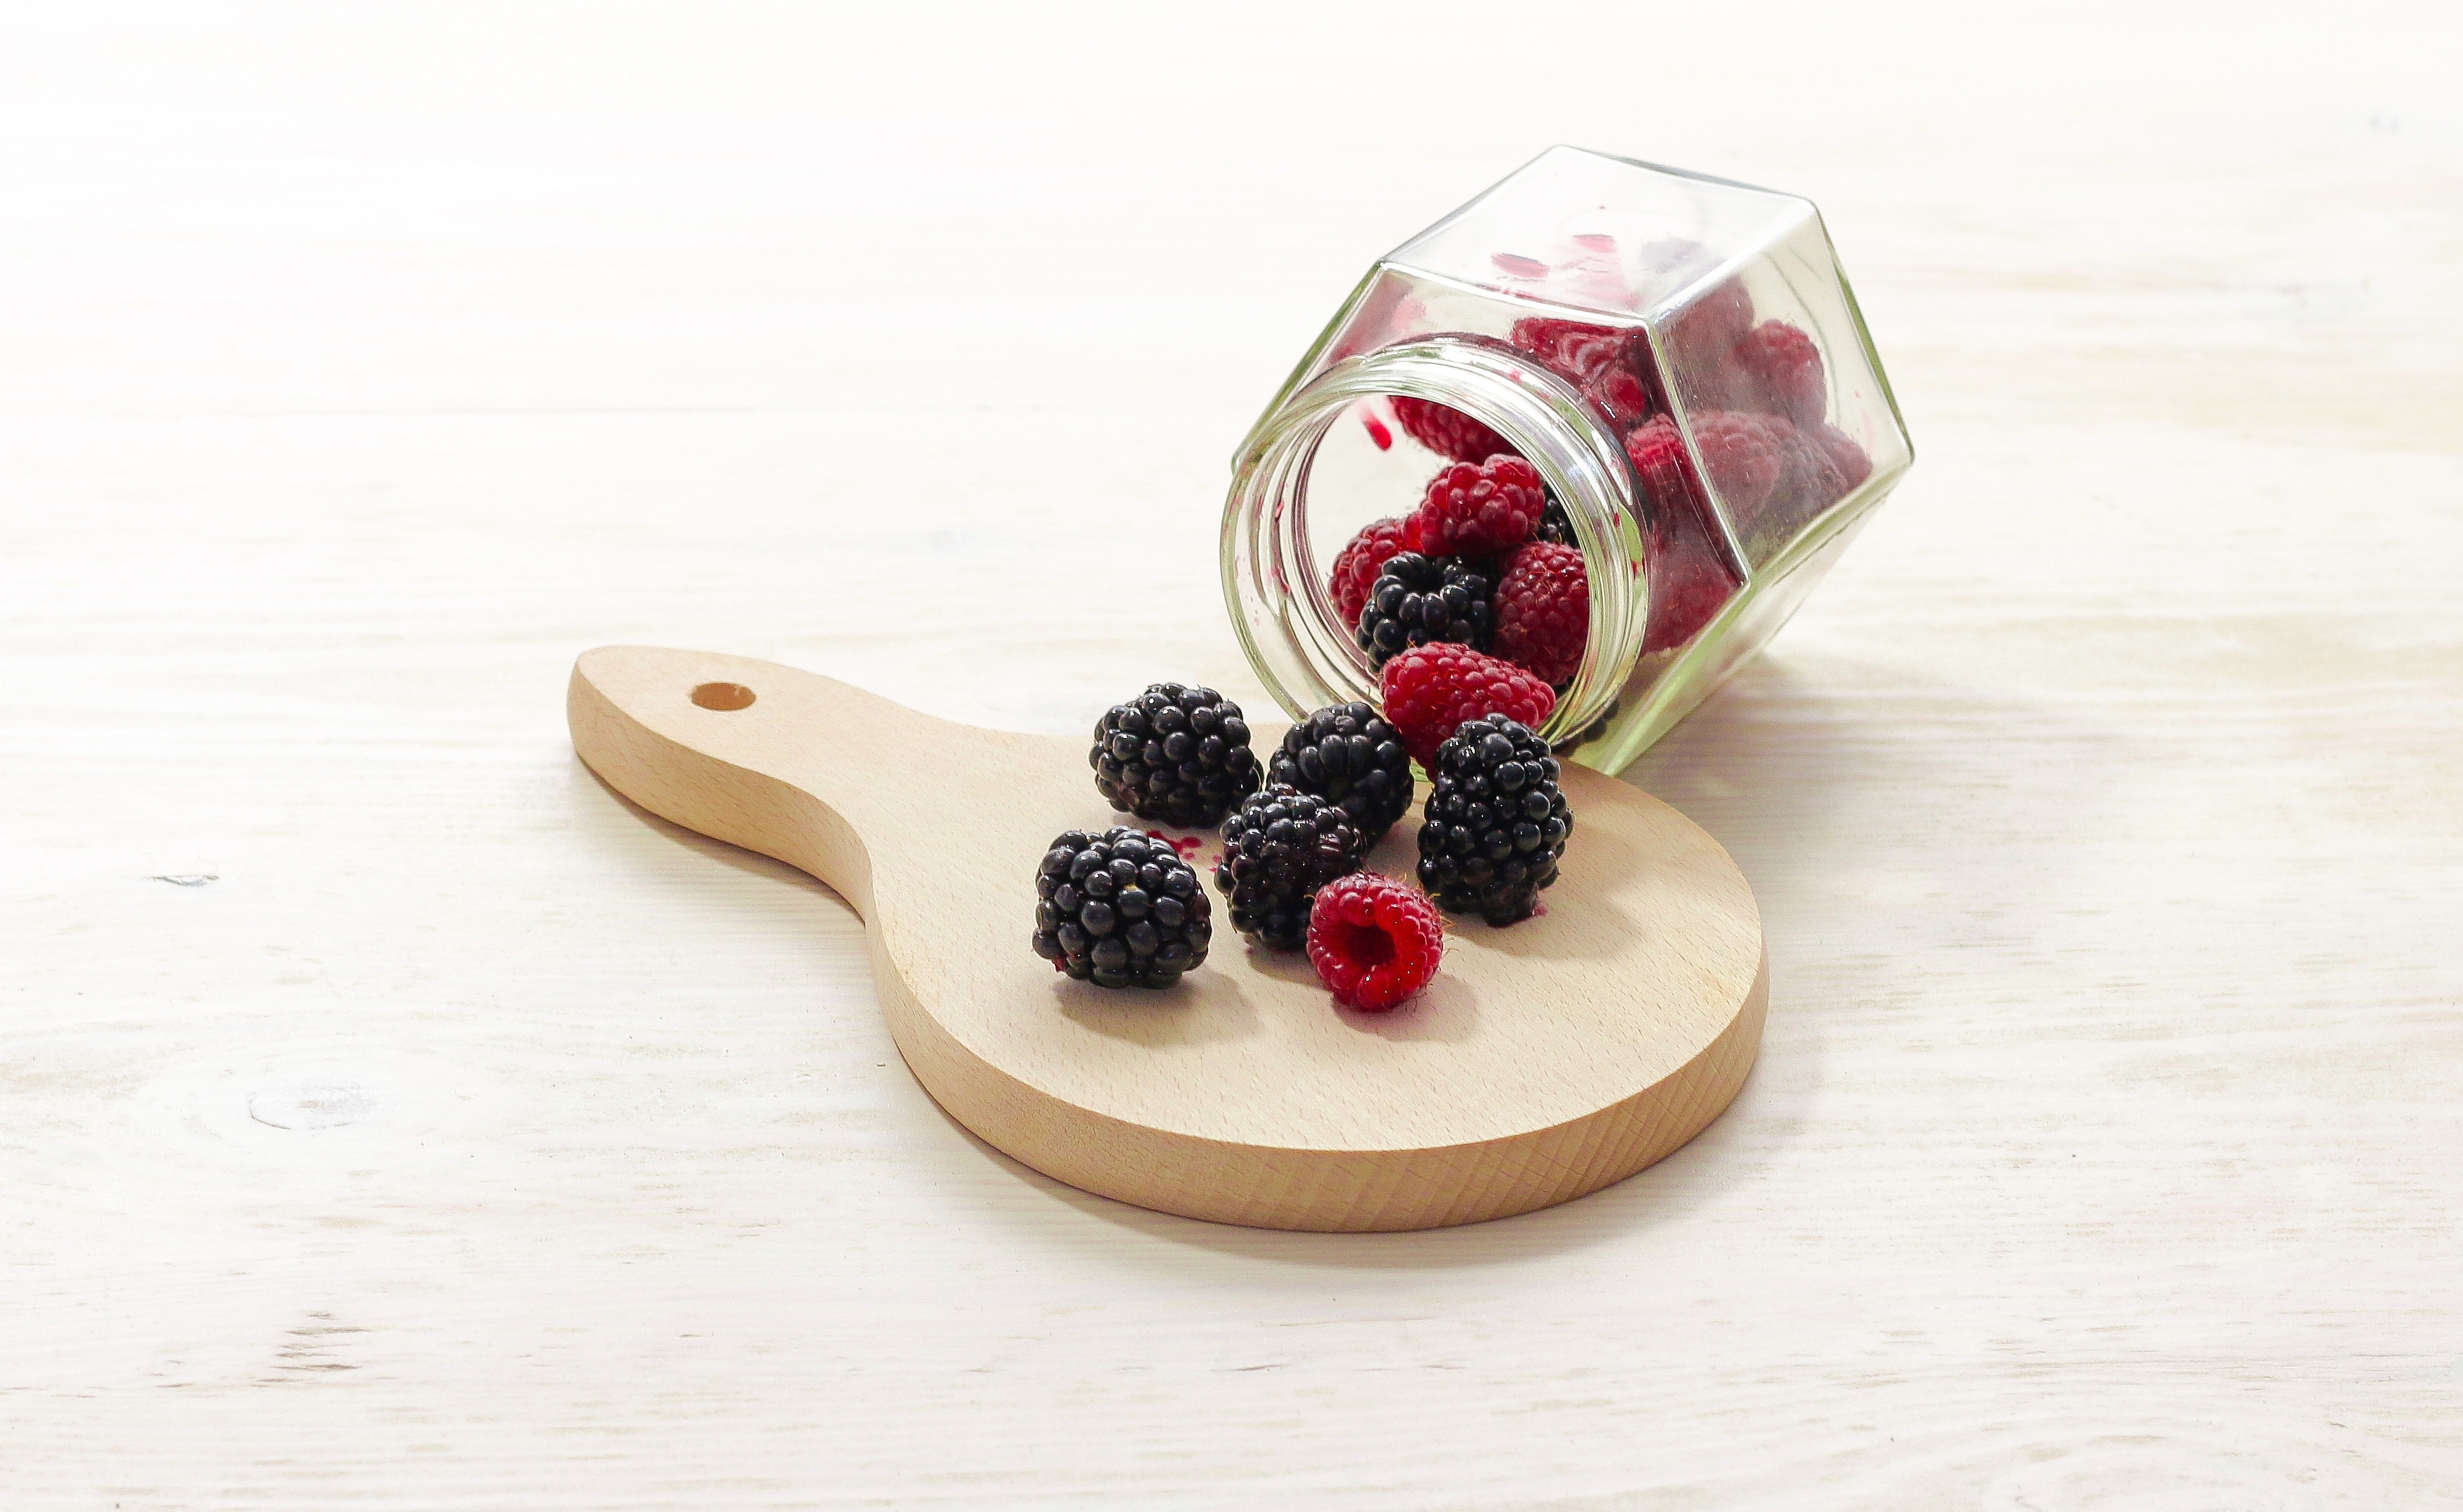 berries - fruit- health benefits - antioxidants - free radicals - nutritional information - nutrition - healthy food - organic fruit - strawberries - summer fruit